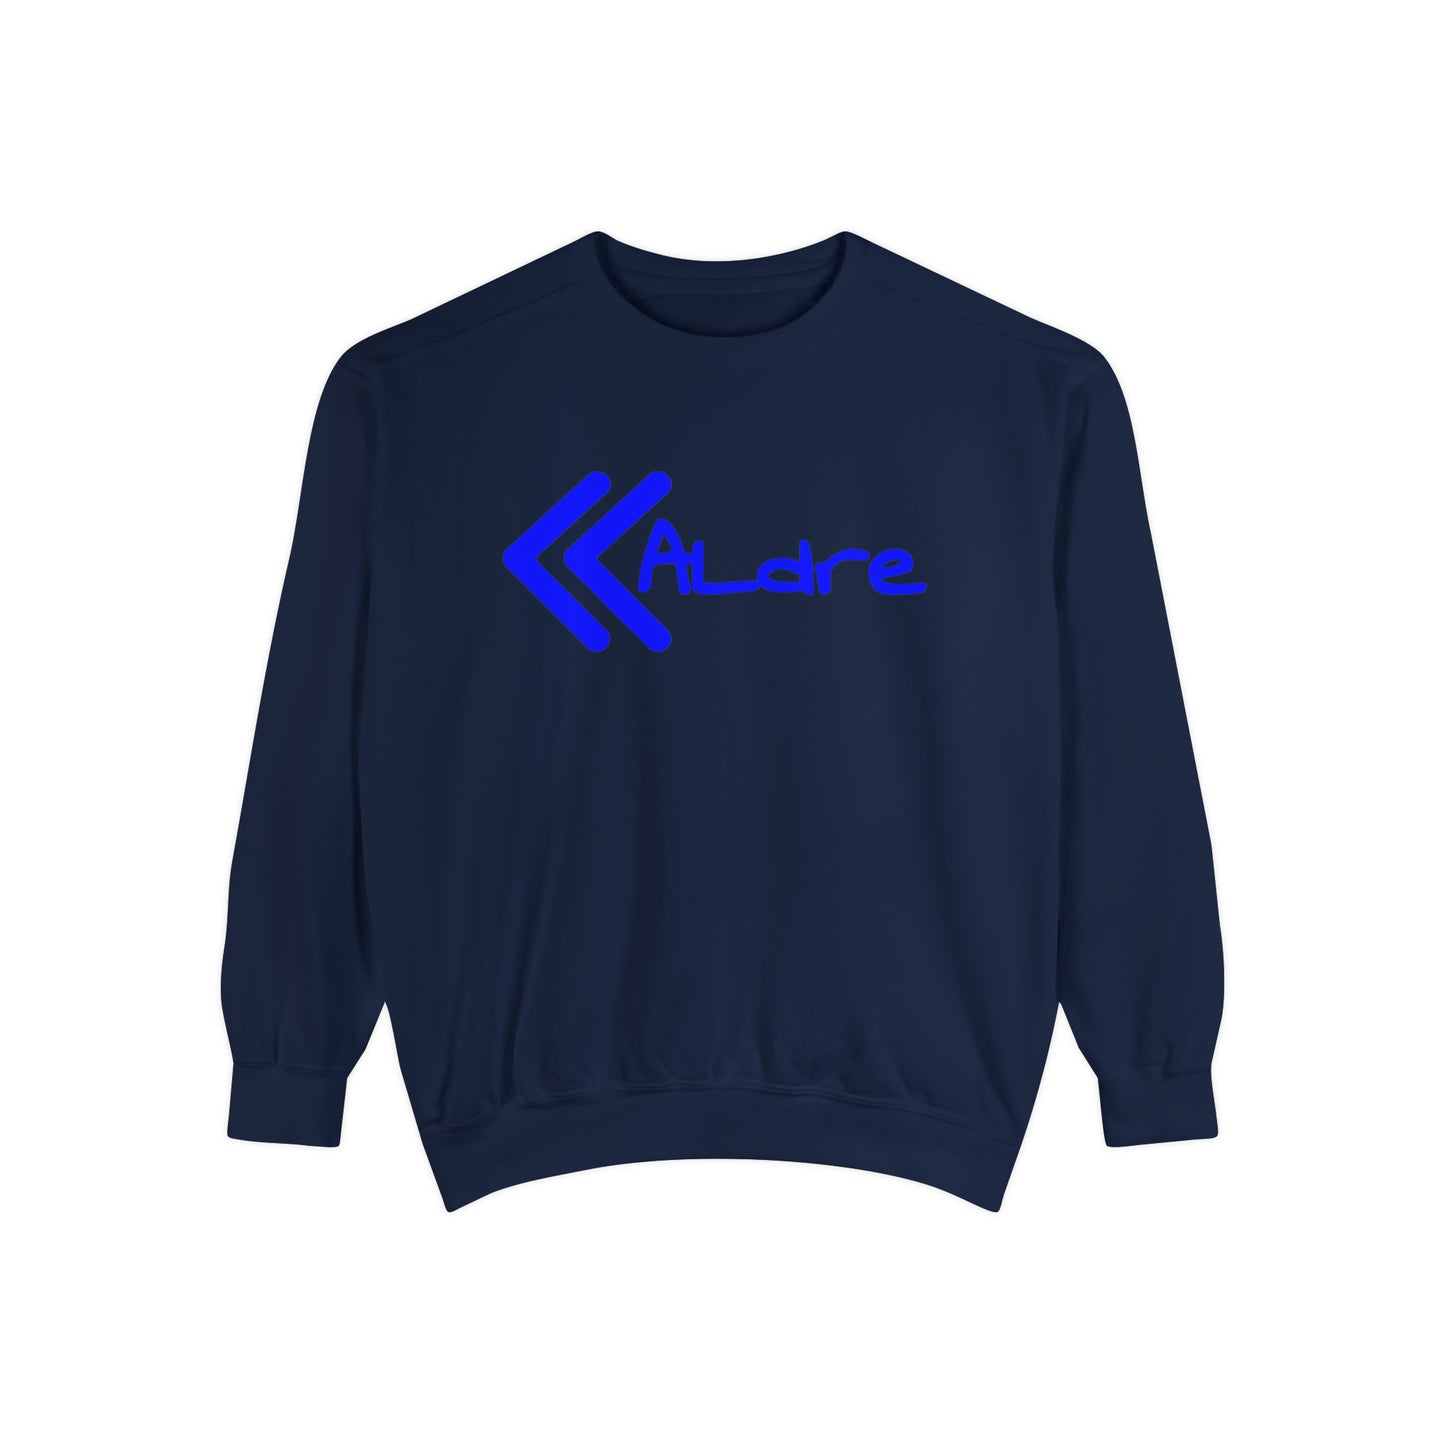 Blue ALdre Garment-Dyed Sweatshirt